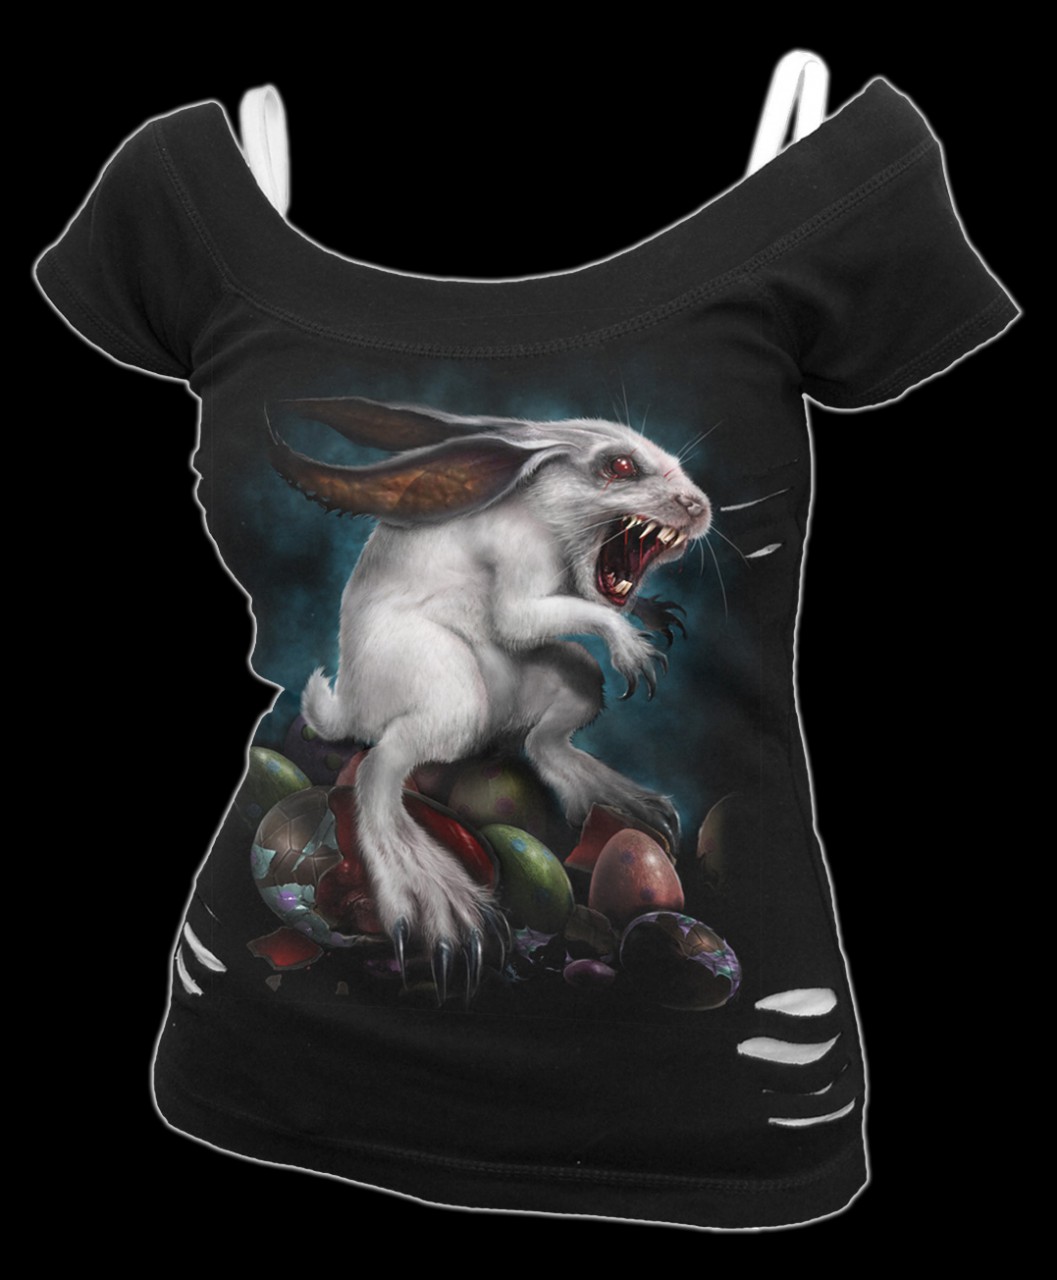 Rabbit Hole - 2in1 Ripped Fantasy Shirt